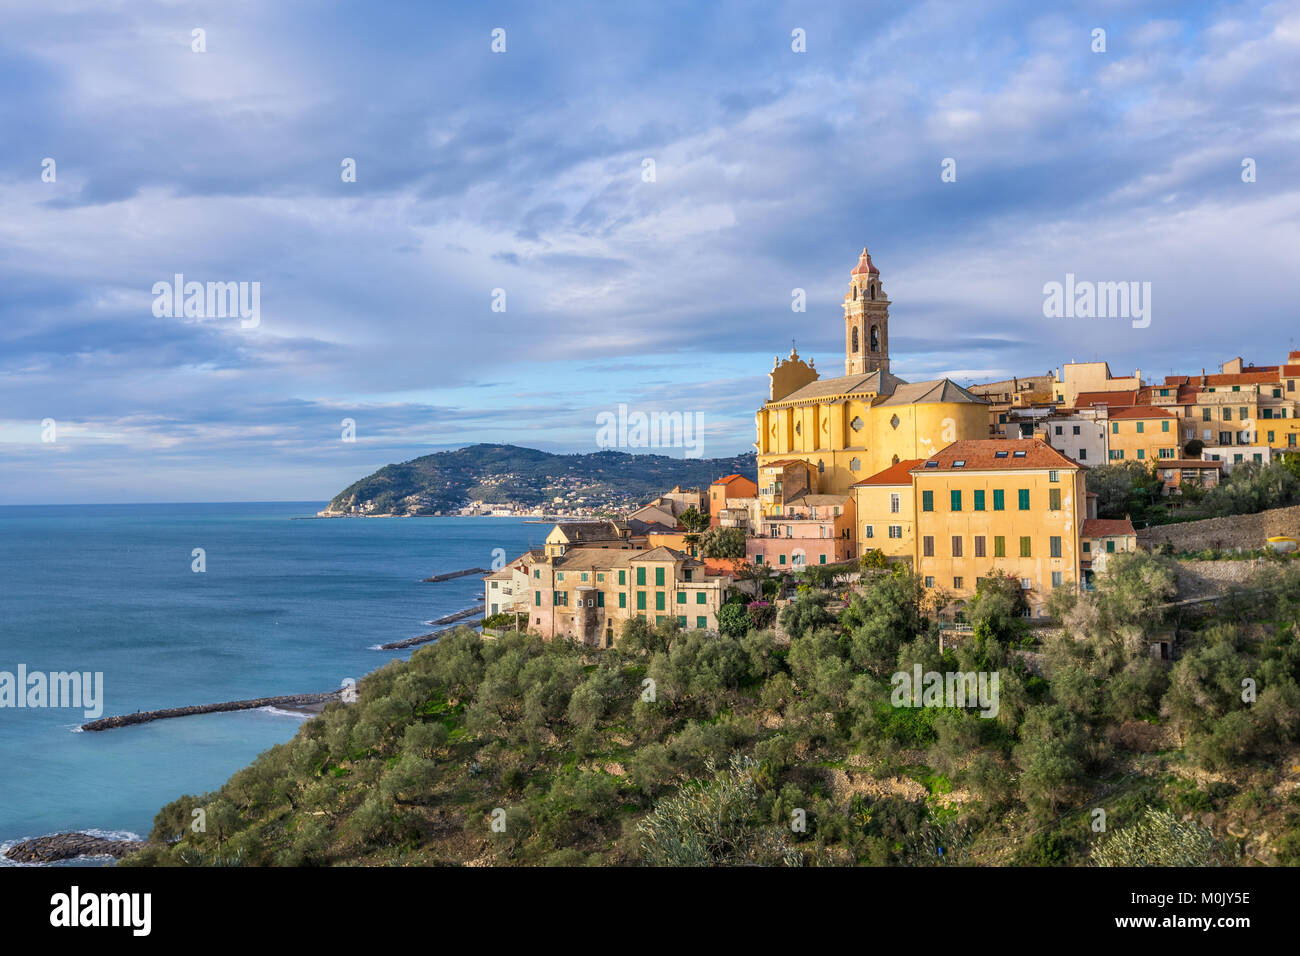 Cervo - medieval hilltop town located on Ligurian coast, province of Imperia, Liguria, Italy Stock Photo